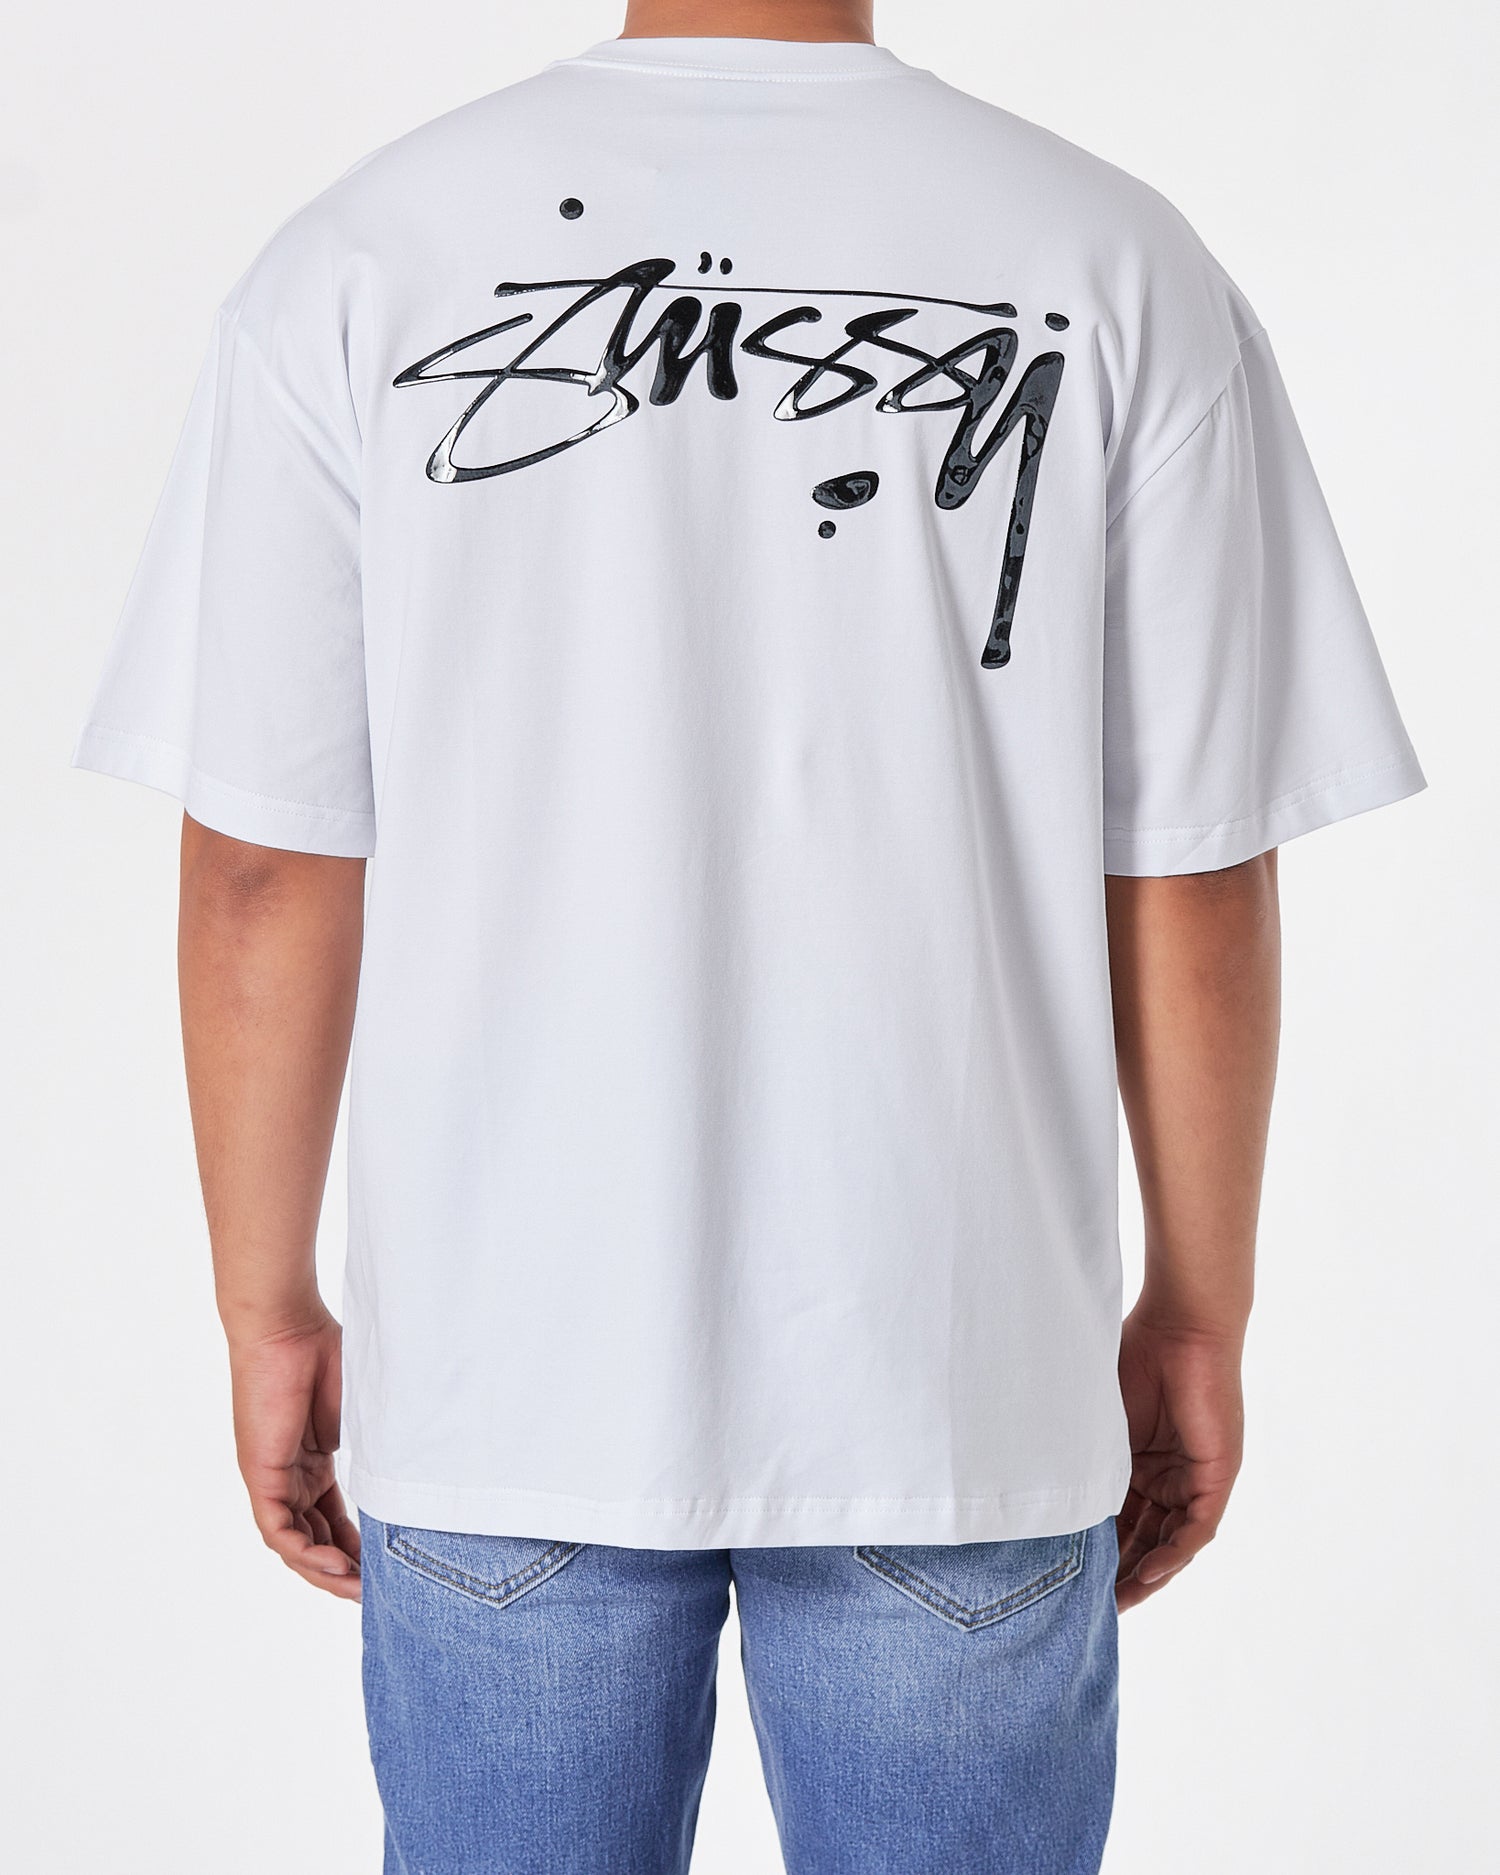 STU Front Back Logo Graffiti Printed Men White T-Shirt 20.90